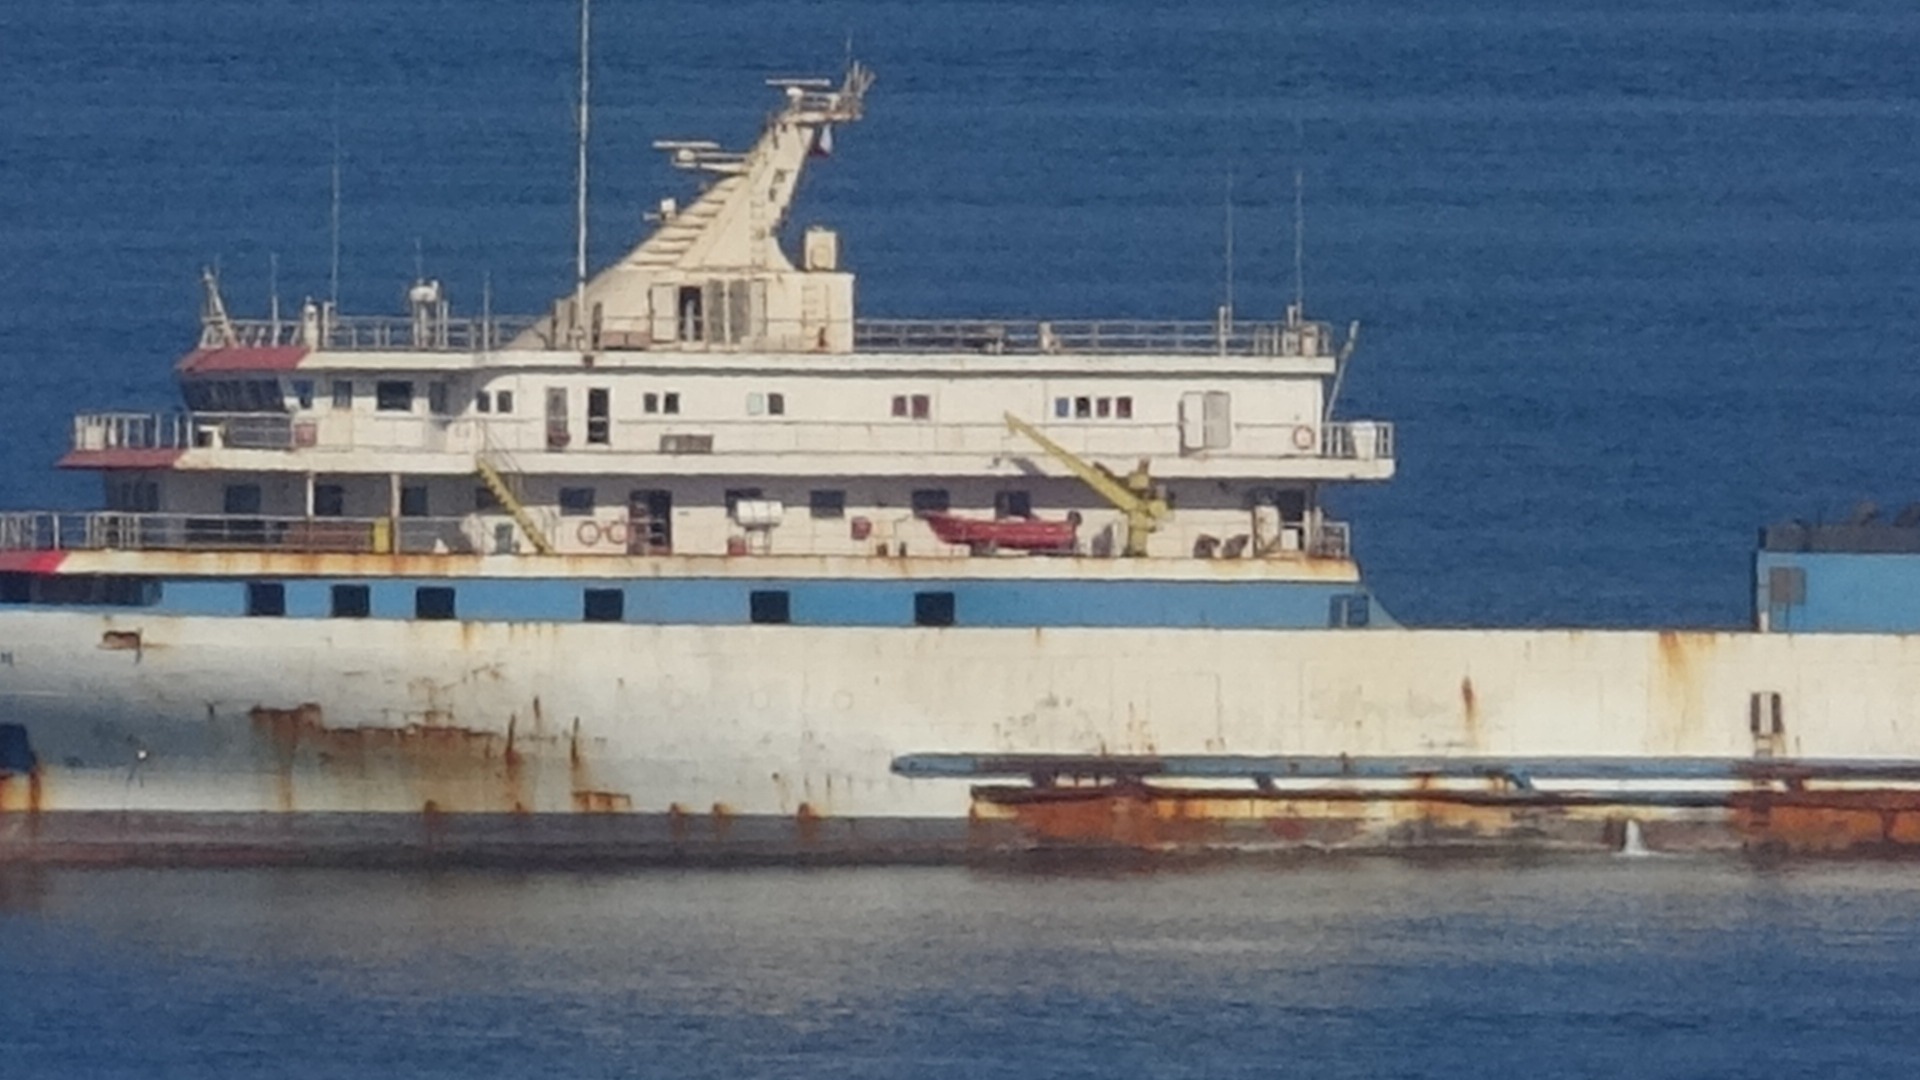 Yunanistan'ın saldırdığı gemi Mavi Marmara çıktı 1